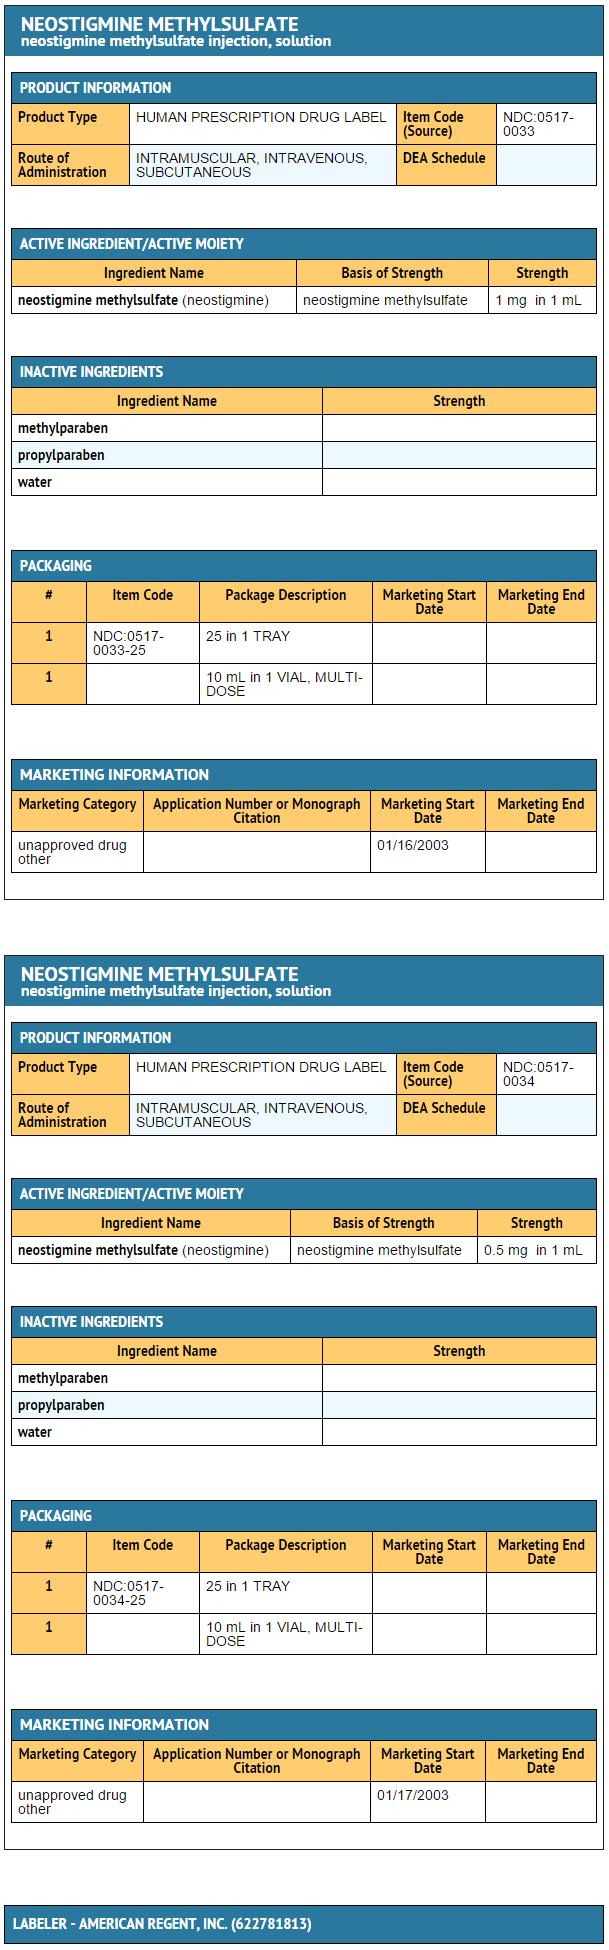 File:Neostigmine methylsulfate FDA package label.png